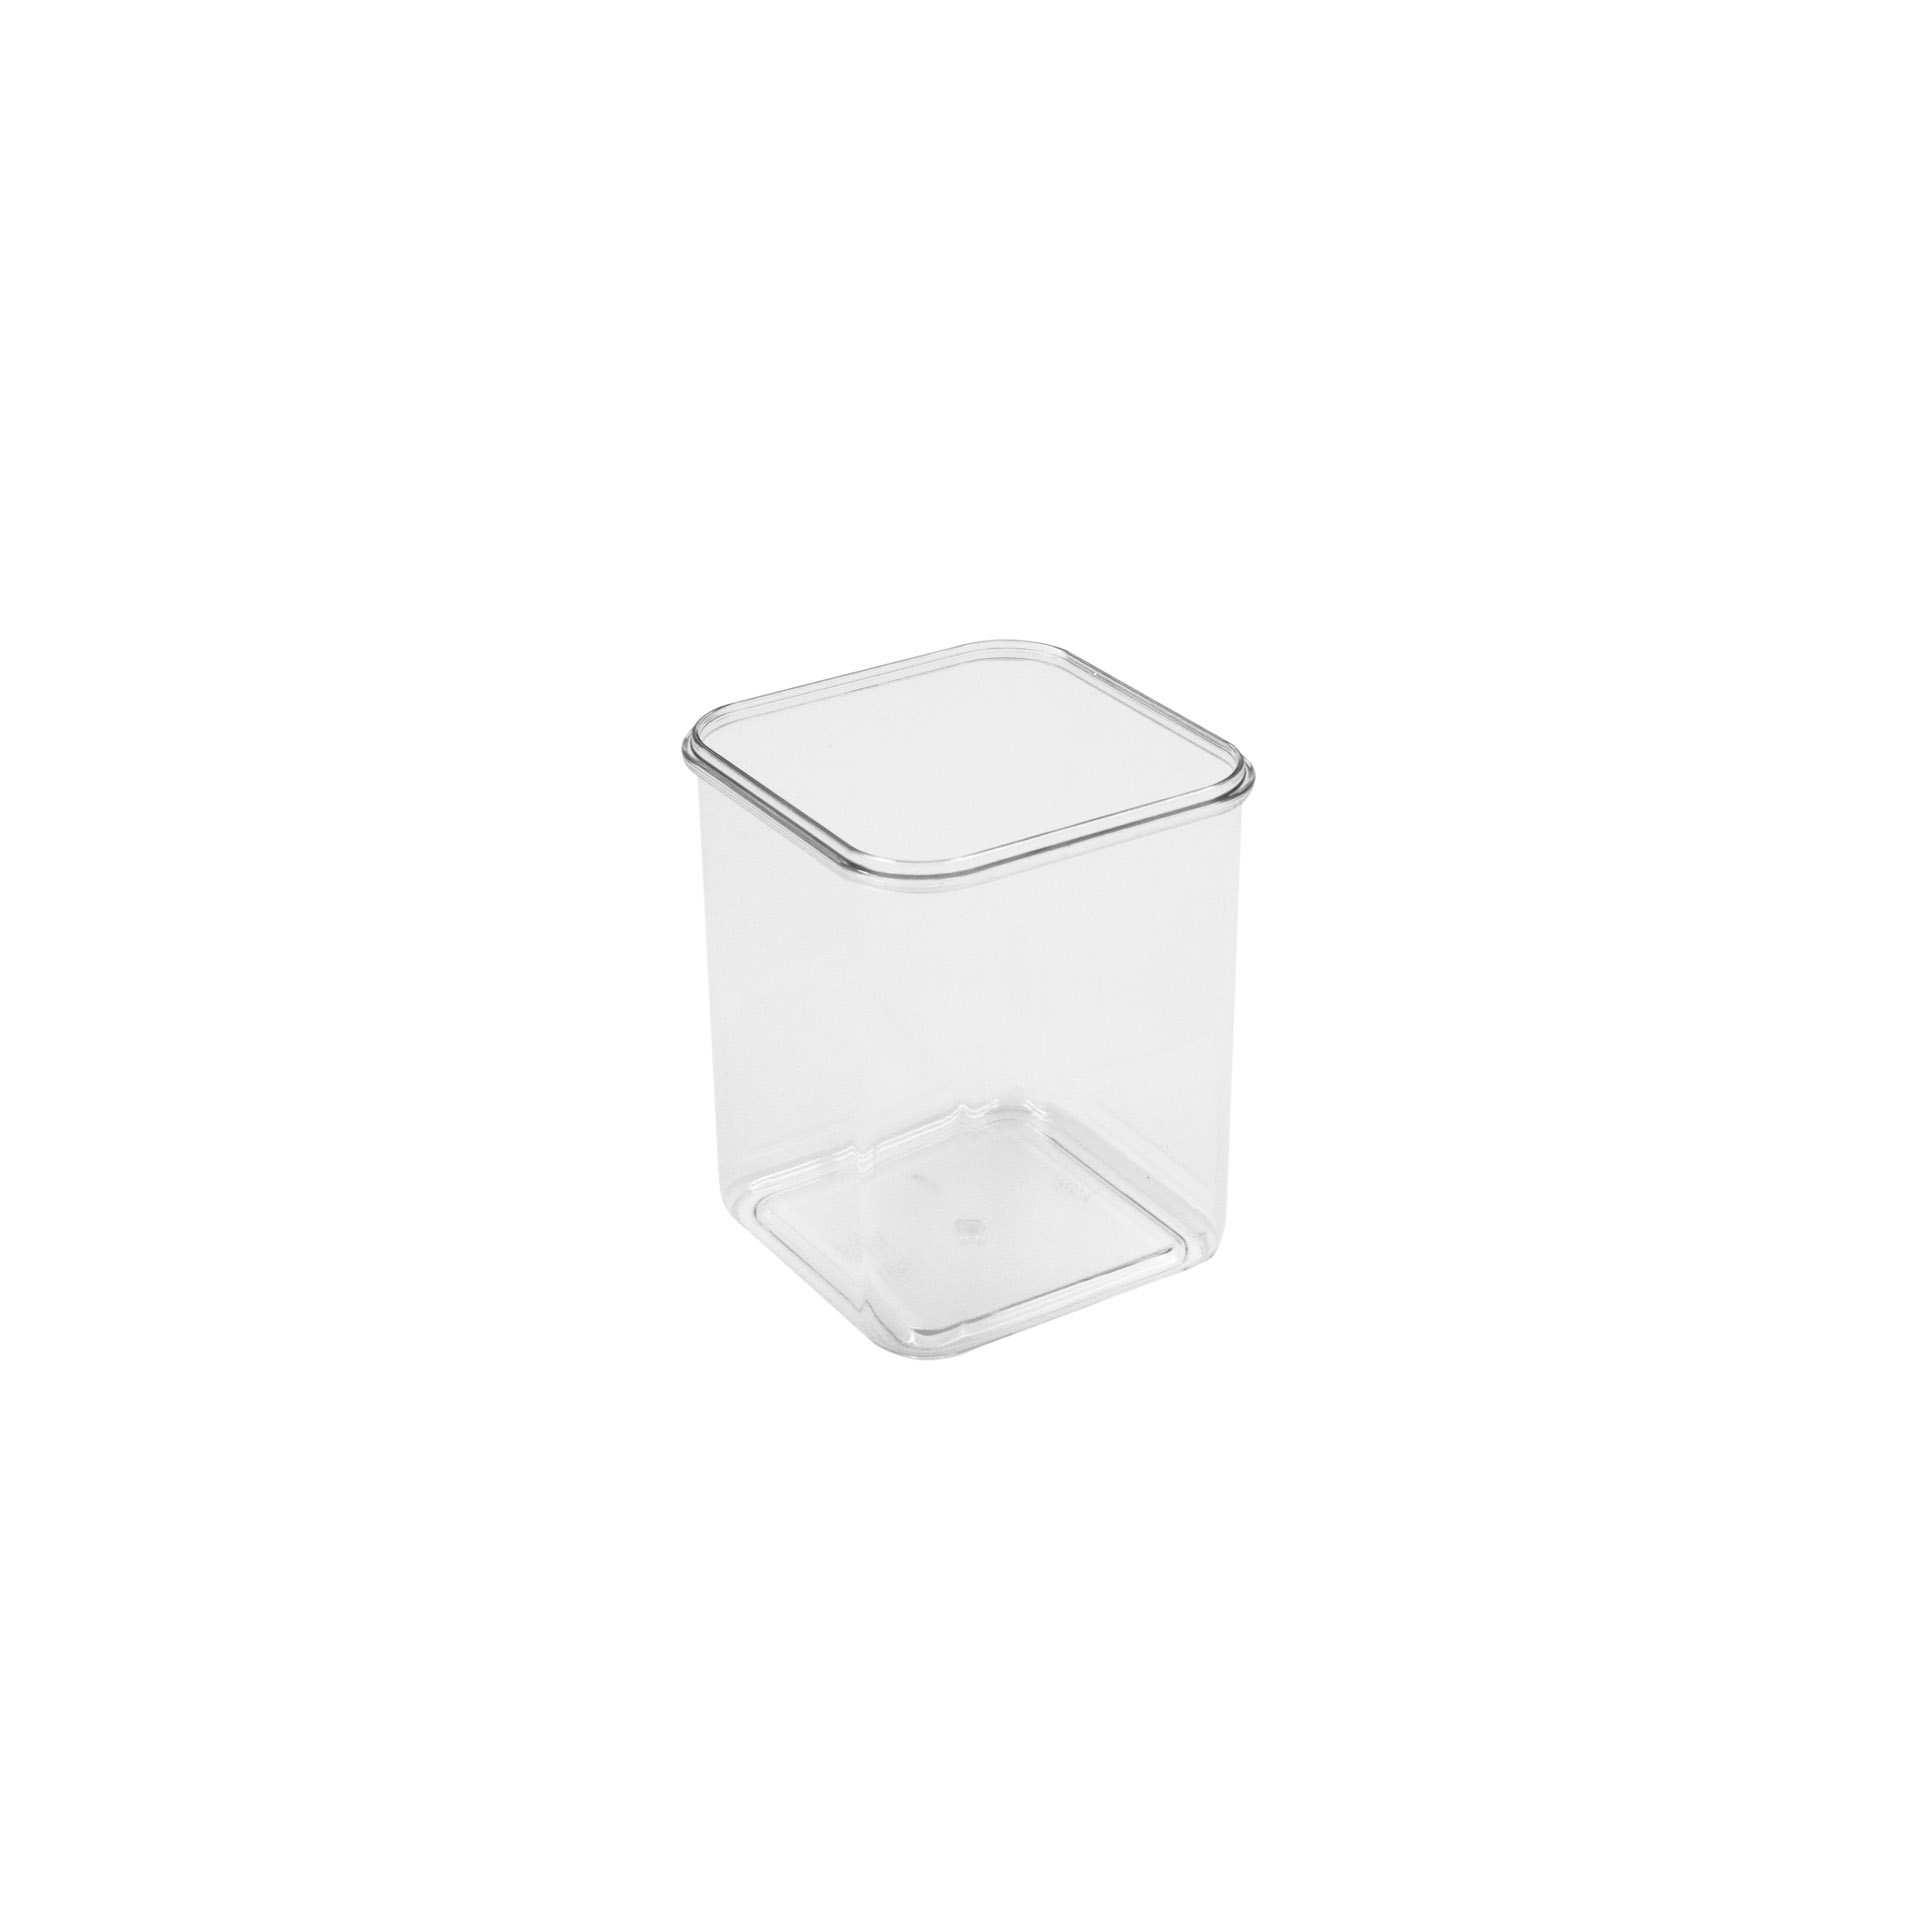 Vorratsdose - mit Deckel - transparent - quadratisch - Abm. 10,5 x 10,5 x 14,0 cm - Inhalt 1,0 l - Polystyrol - 152920-C